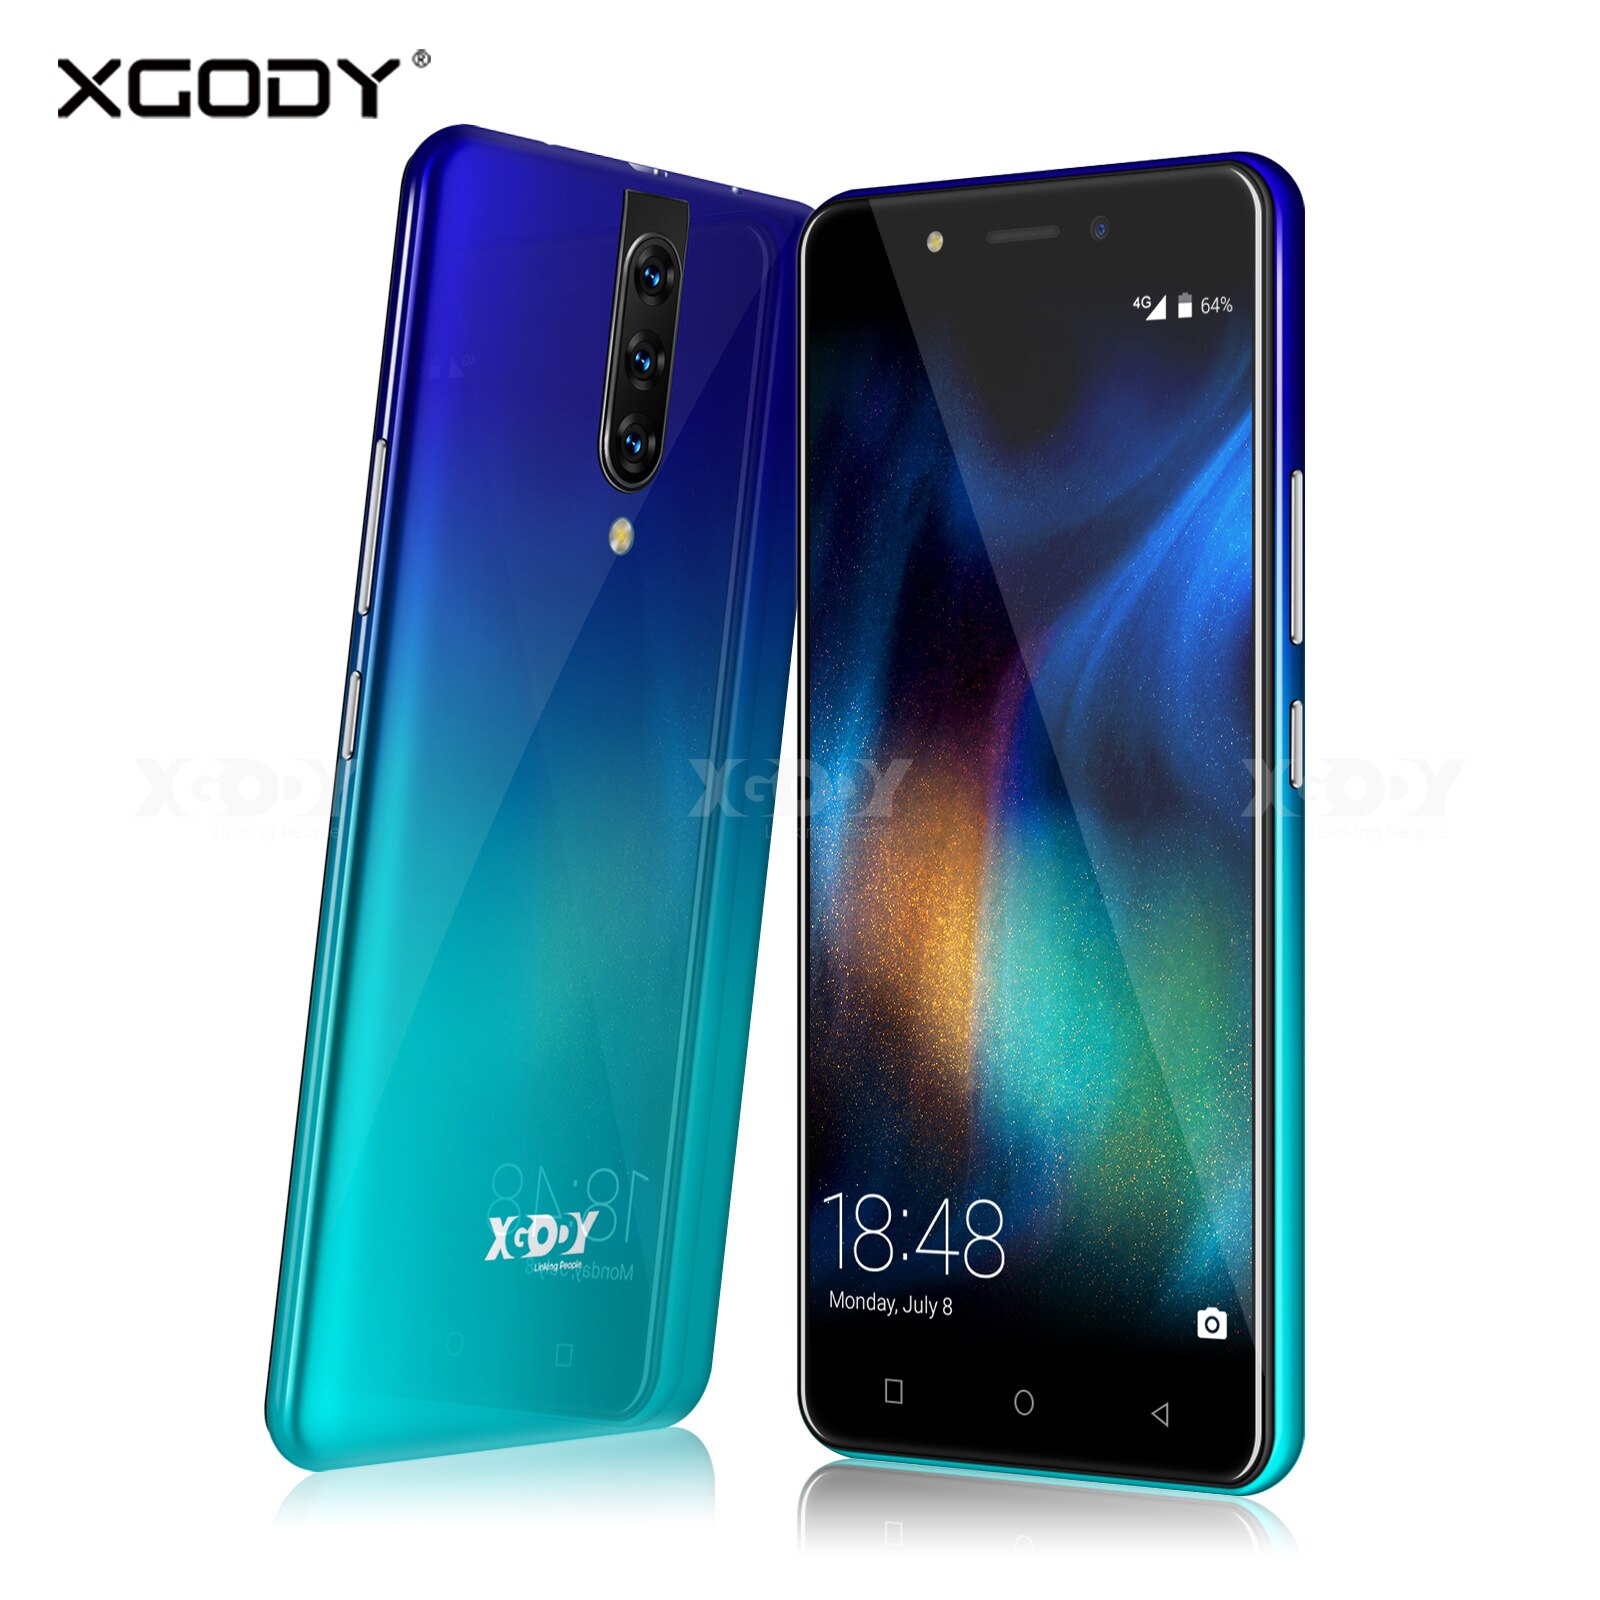 XGODY K20 4G Smartphone Dual SIM 5.5" 18:9 Android 9.0 2GB RAM 16GB ROM MTK6737 Quad Core 5MP Camera 2800mAh WiFi Mobile Phone